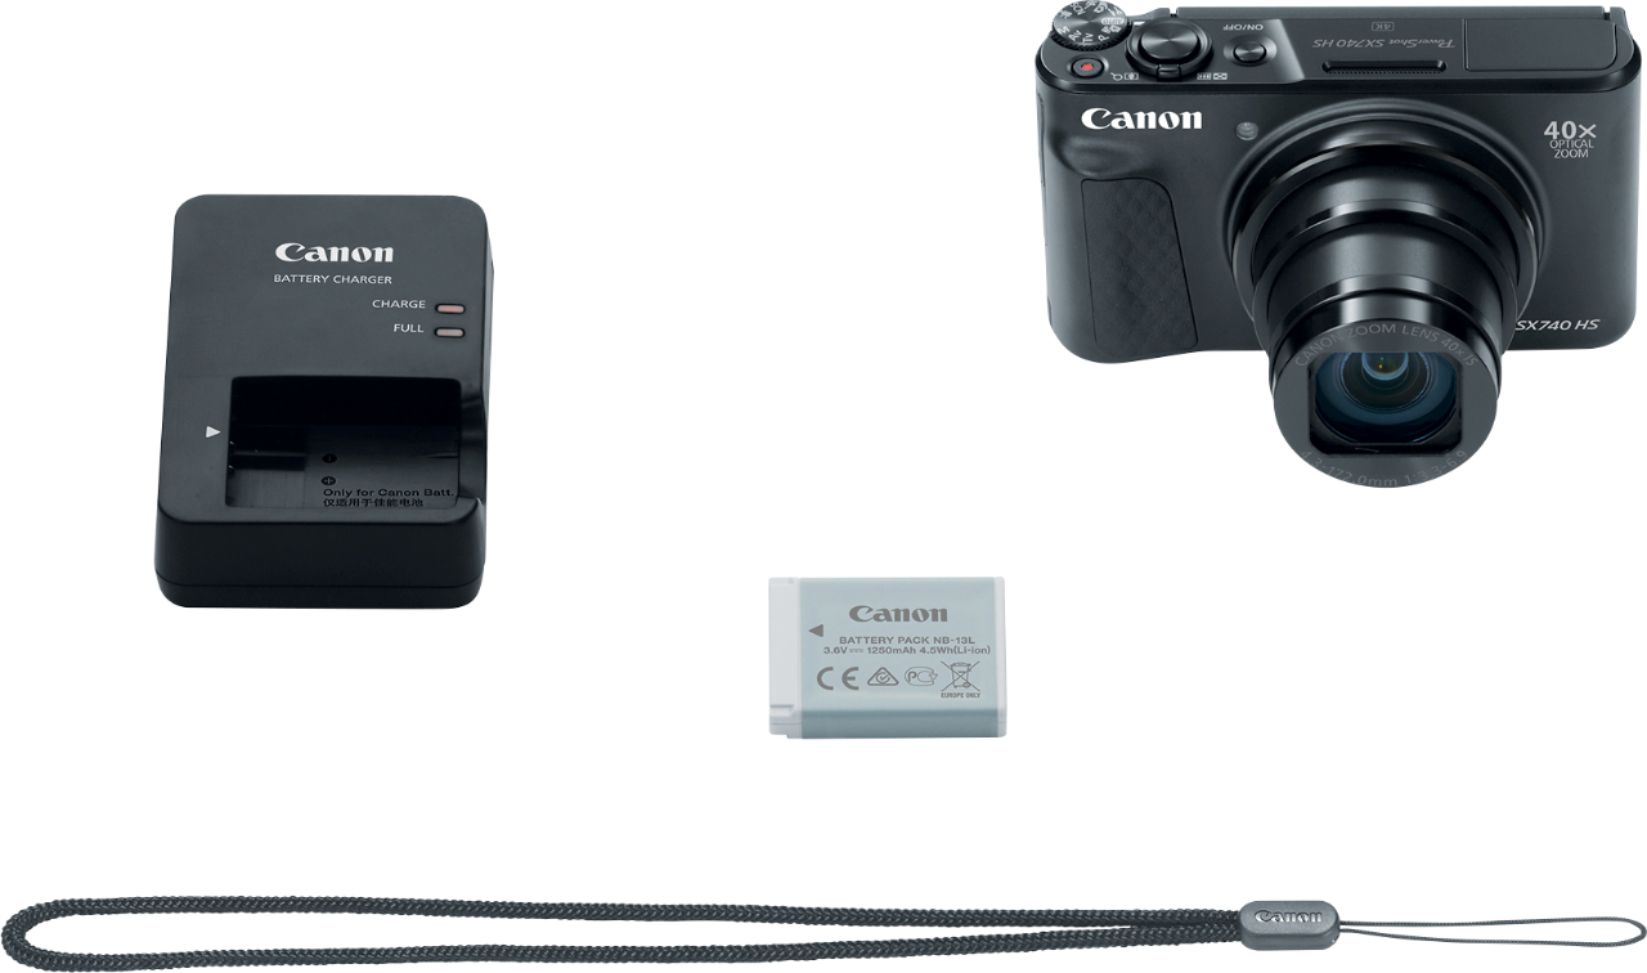 Canon PowerShot SX740 HS 20.3-Megapixel Digital Camera Black